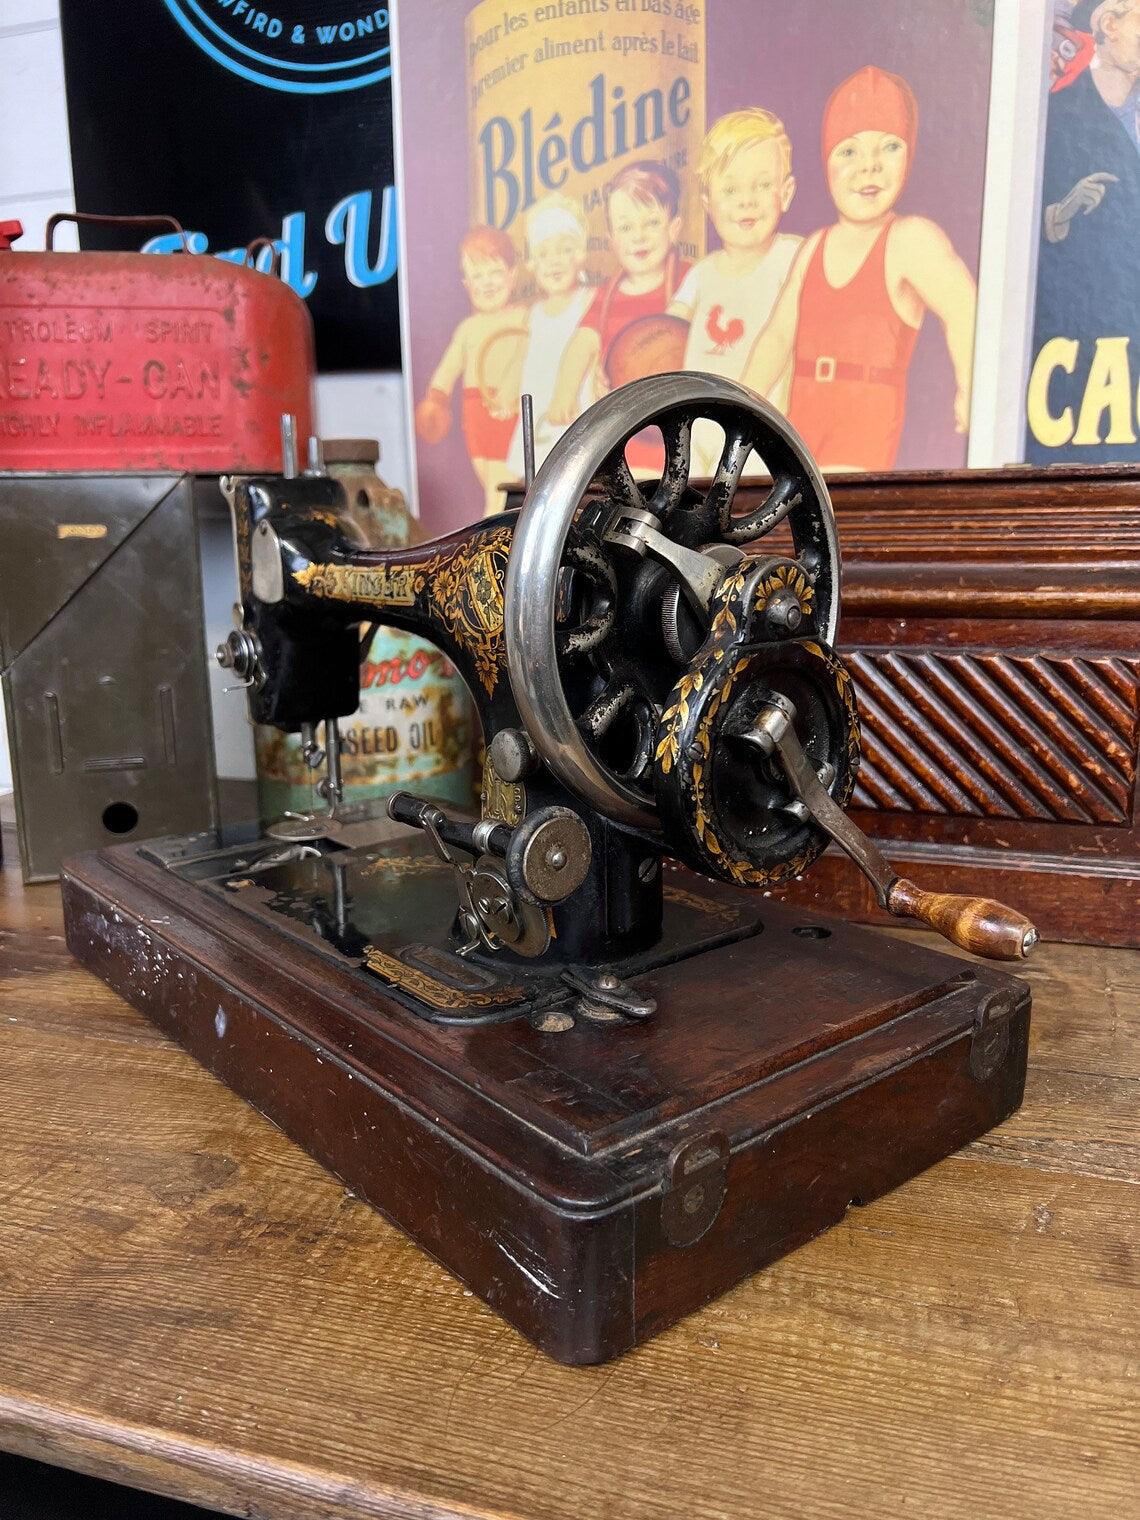 Vintage Singer Sewing Machine Hand Crank Coffin Case Working - Dates 1899 Rustic Home Decor